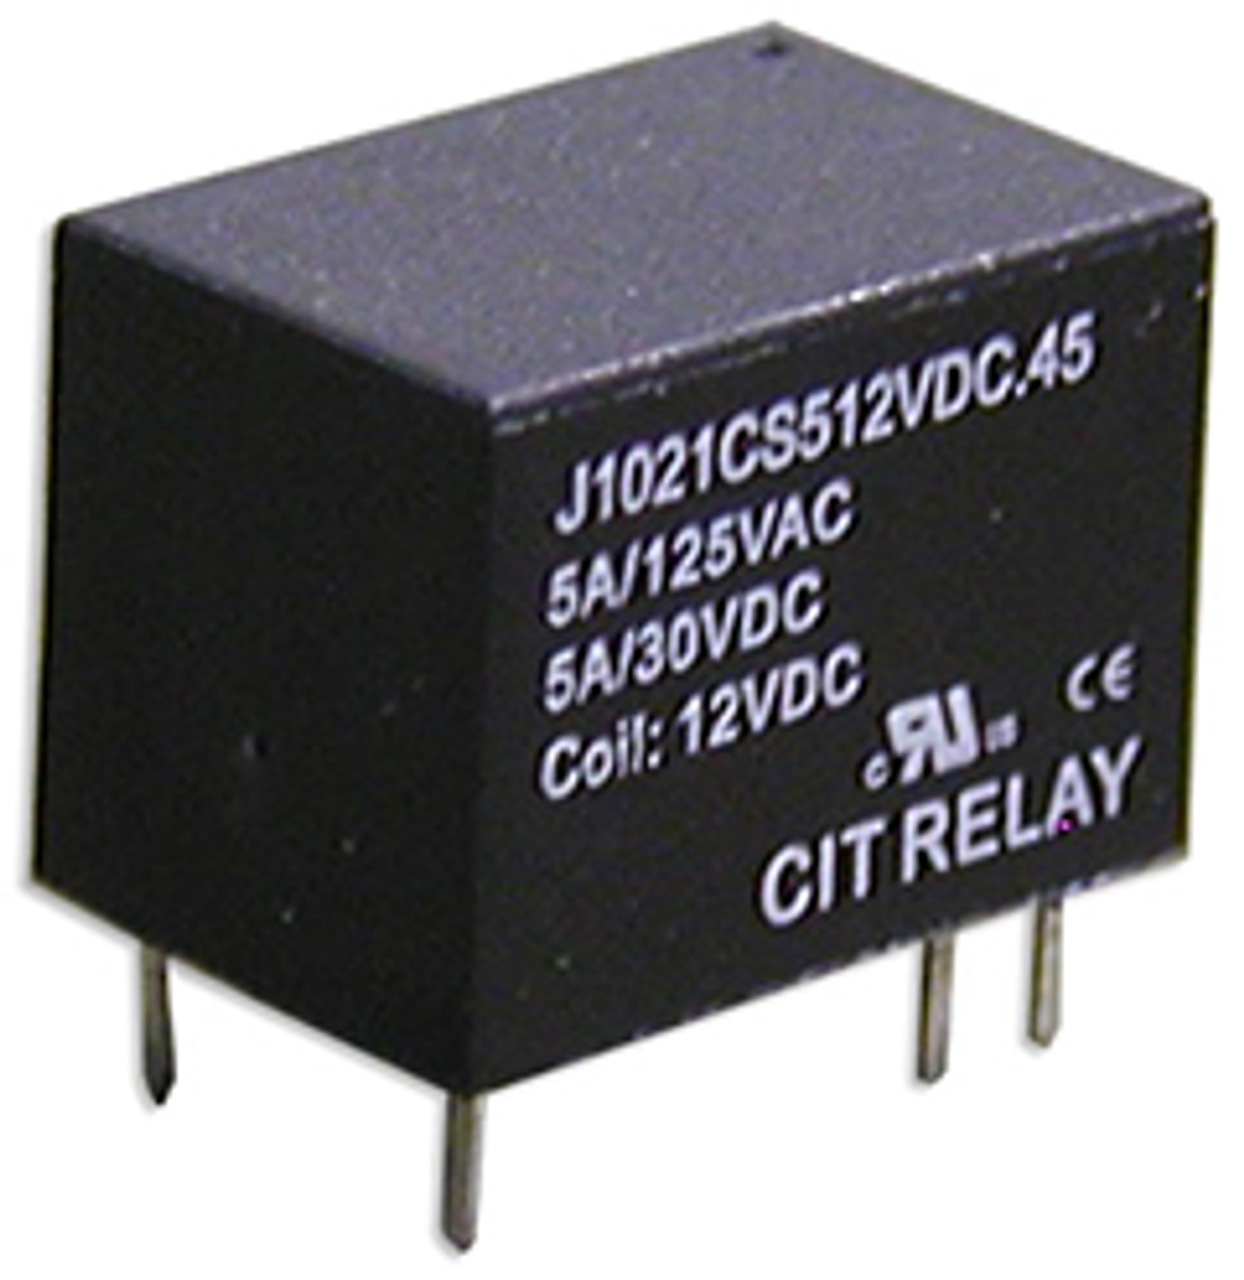 CIT Relay and Switch J1021CS3P3VDC.20 Power Relays